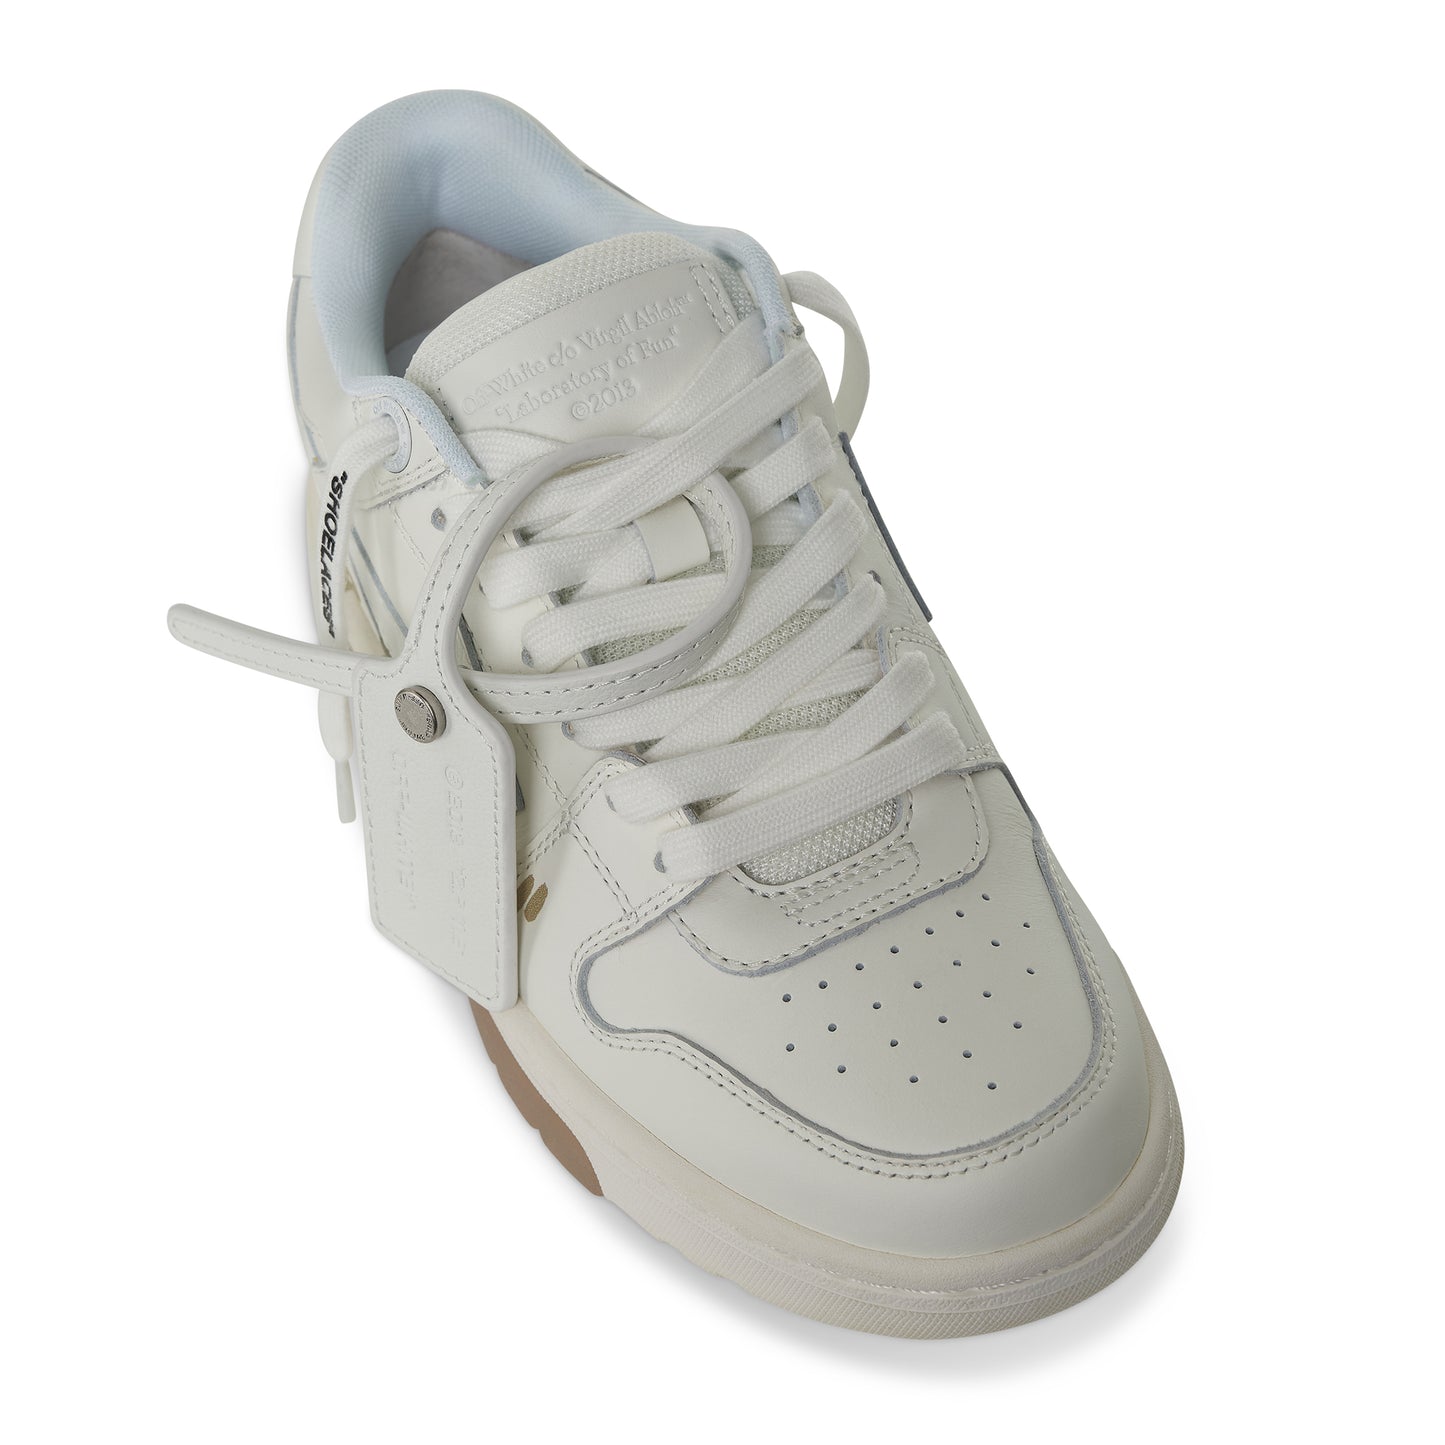 Out Of Office For Walking Sneaker in White/Beige